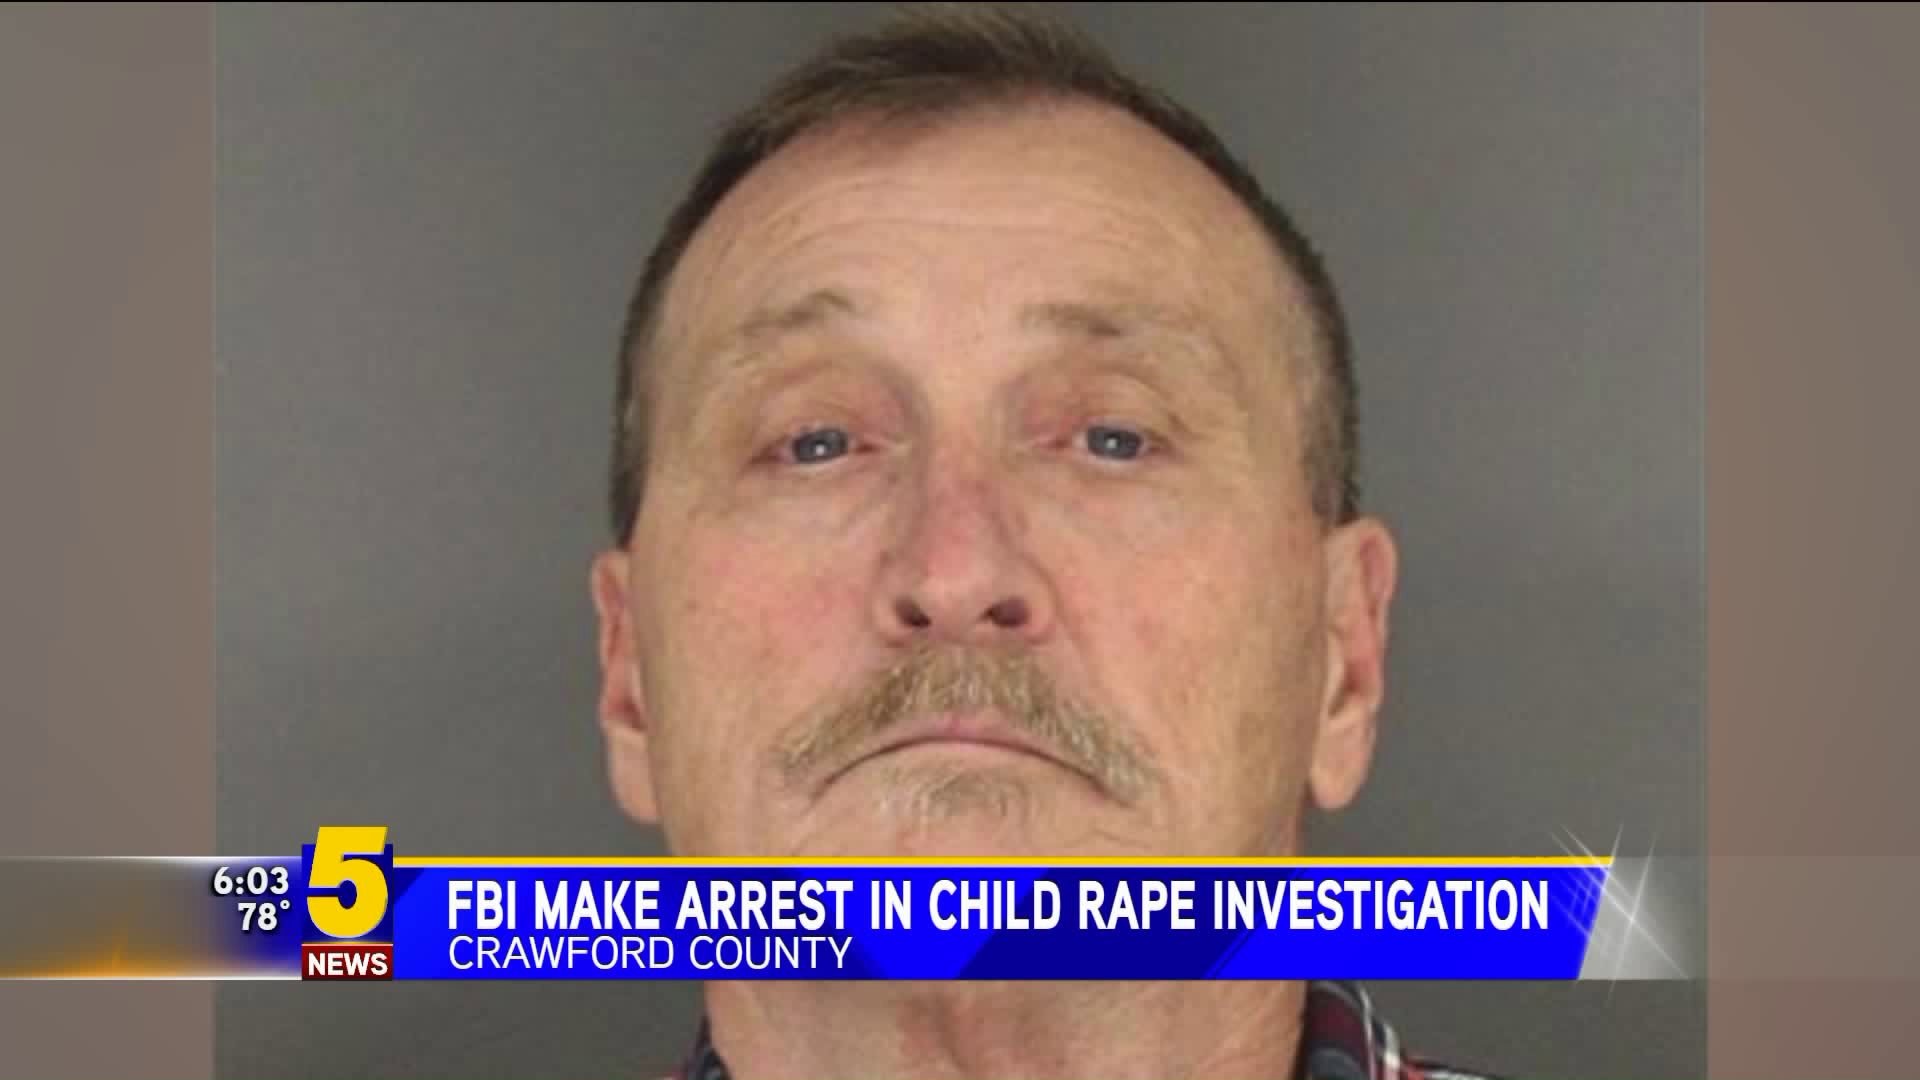 FBI Arrest Child Rape Suspect In Crawford County